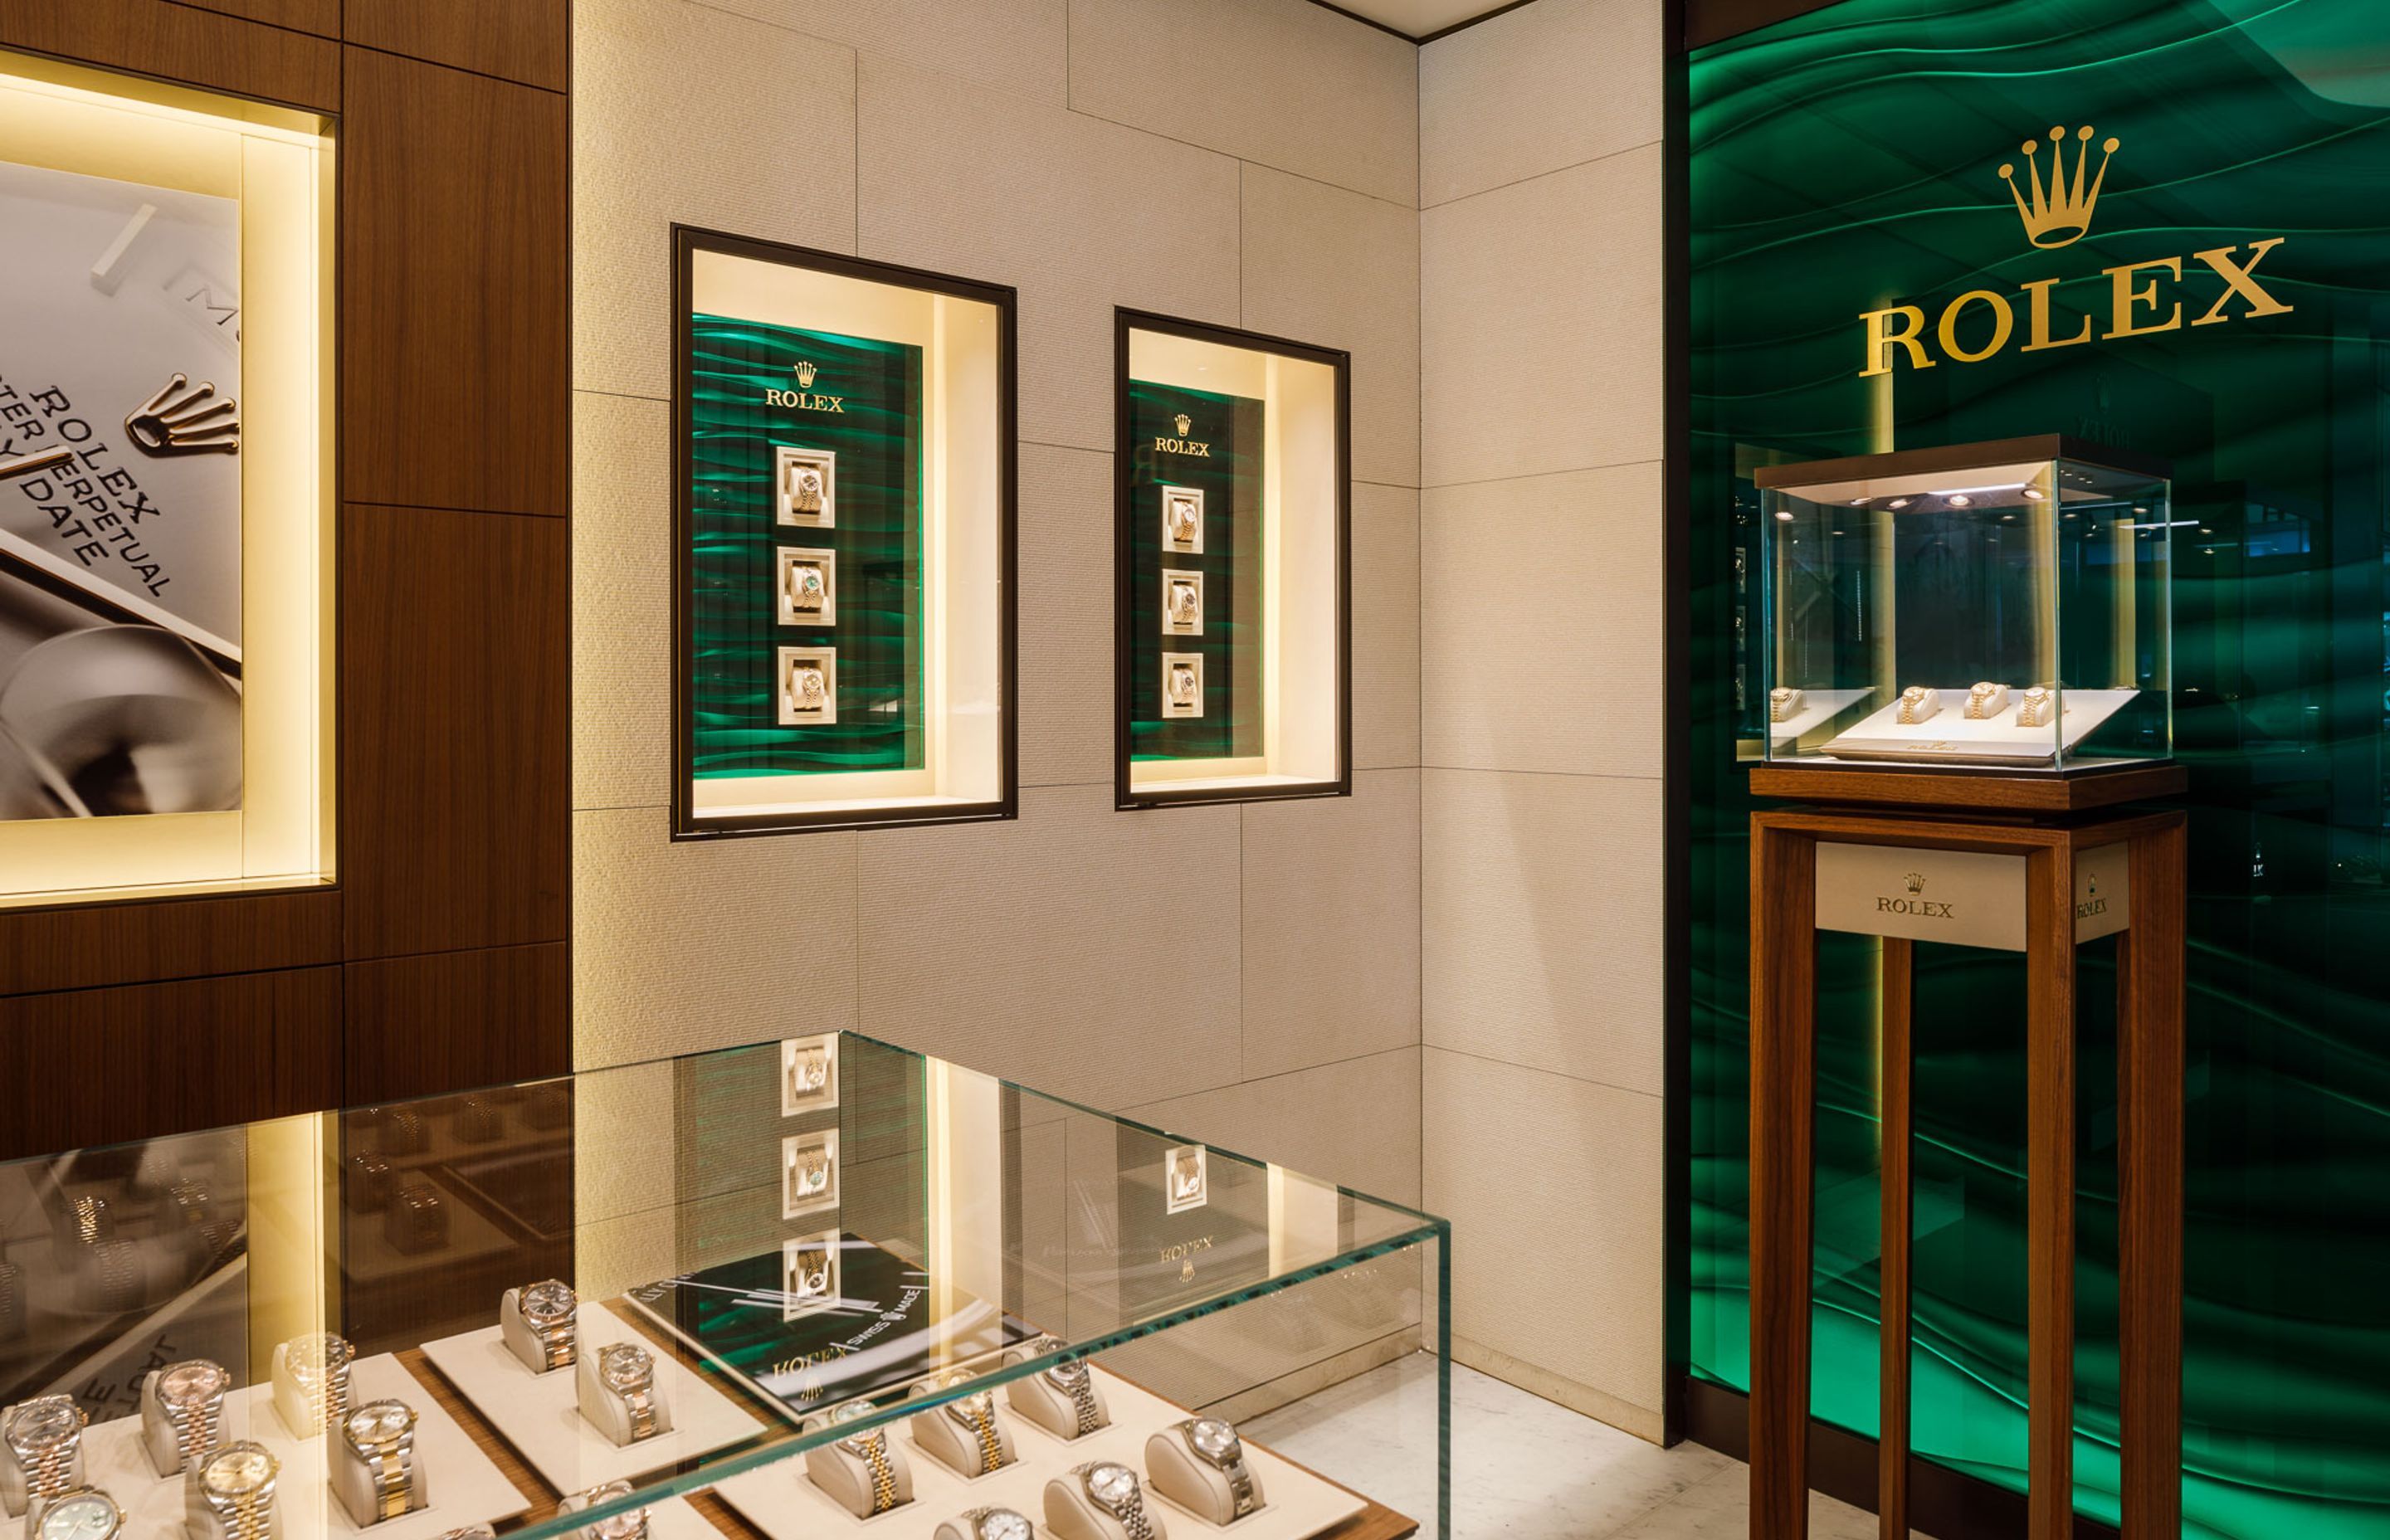 Rolex retail space